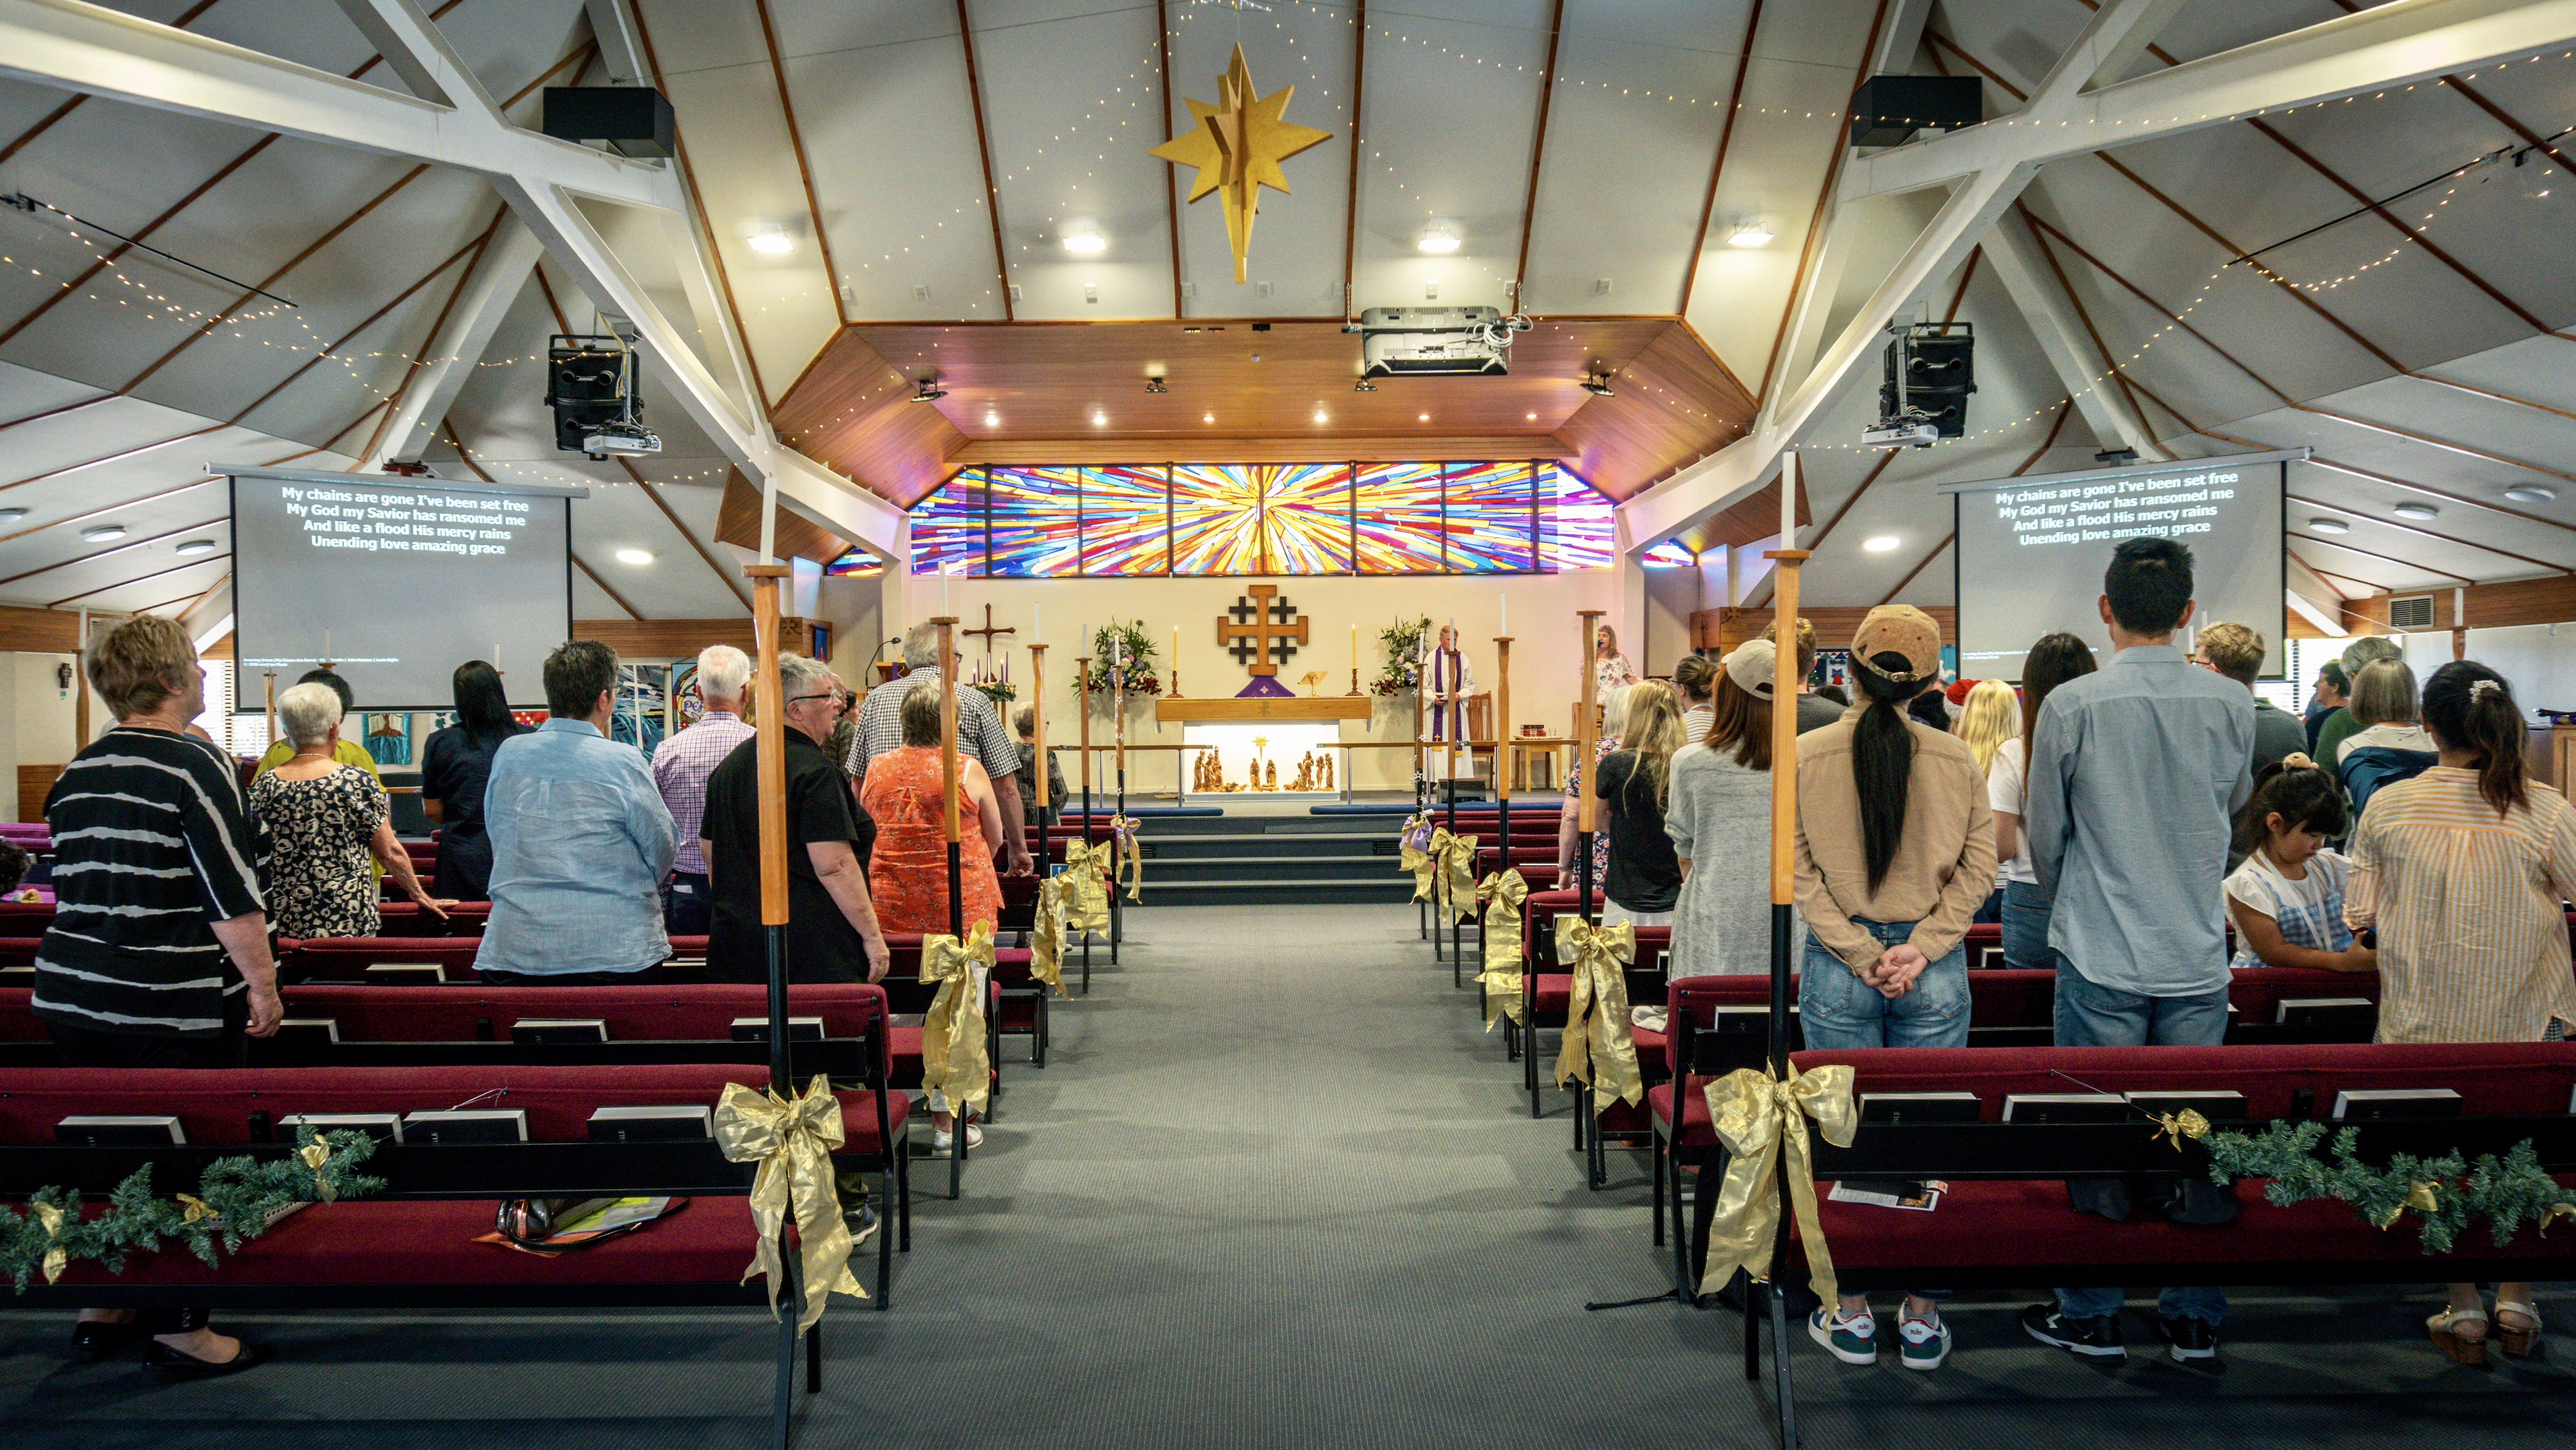 MAIN CHURCH SANCTUARY - Saint Christophers Avonhead